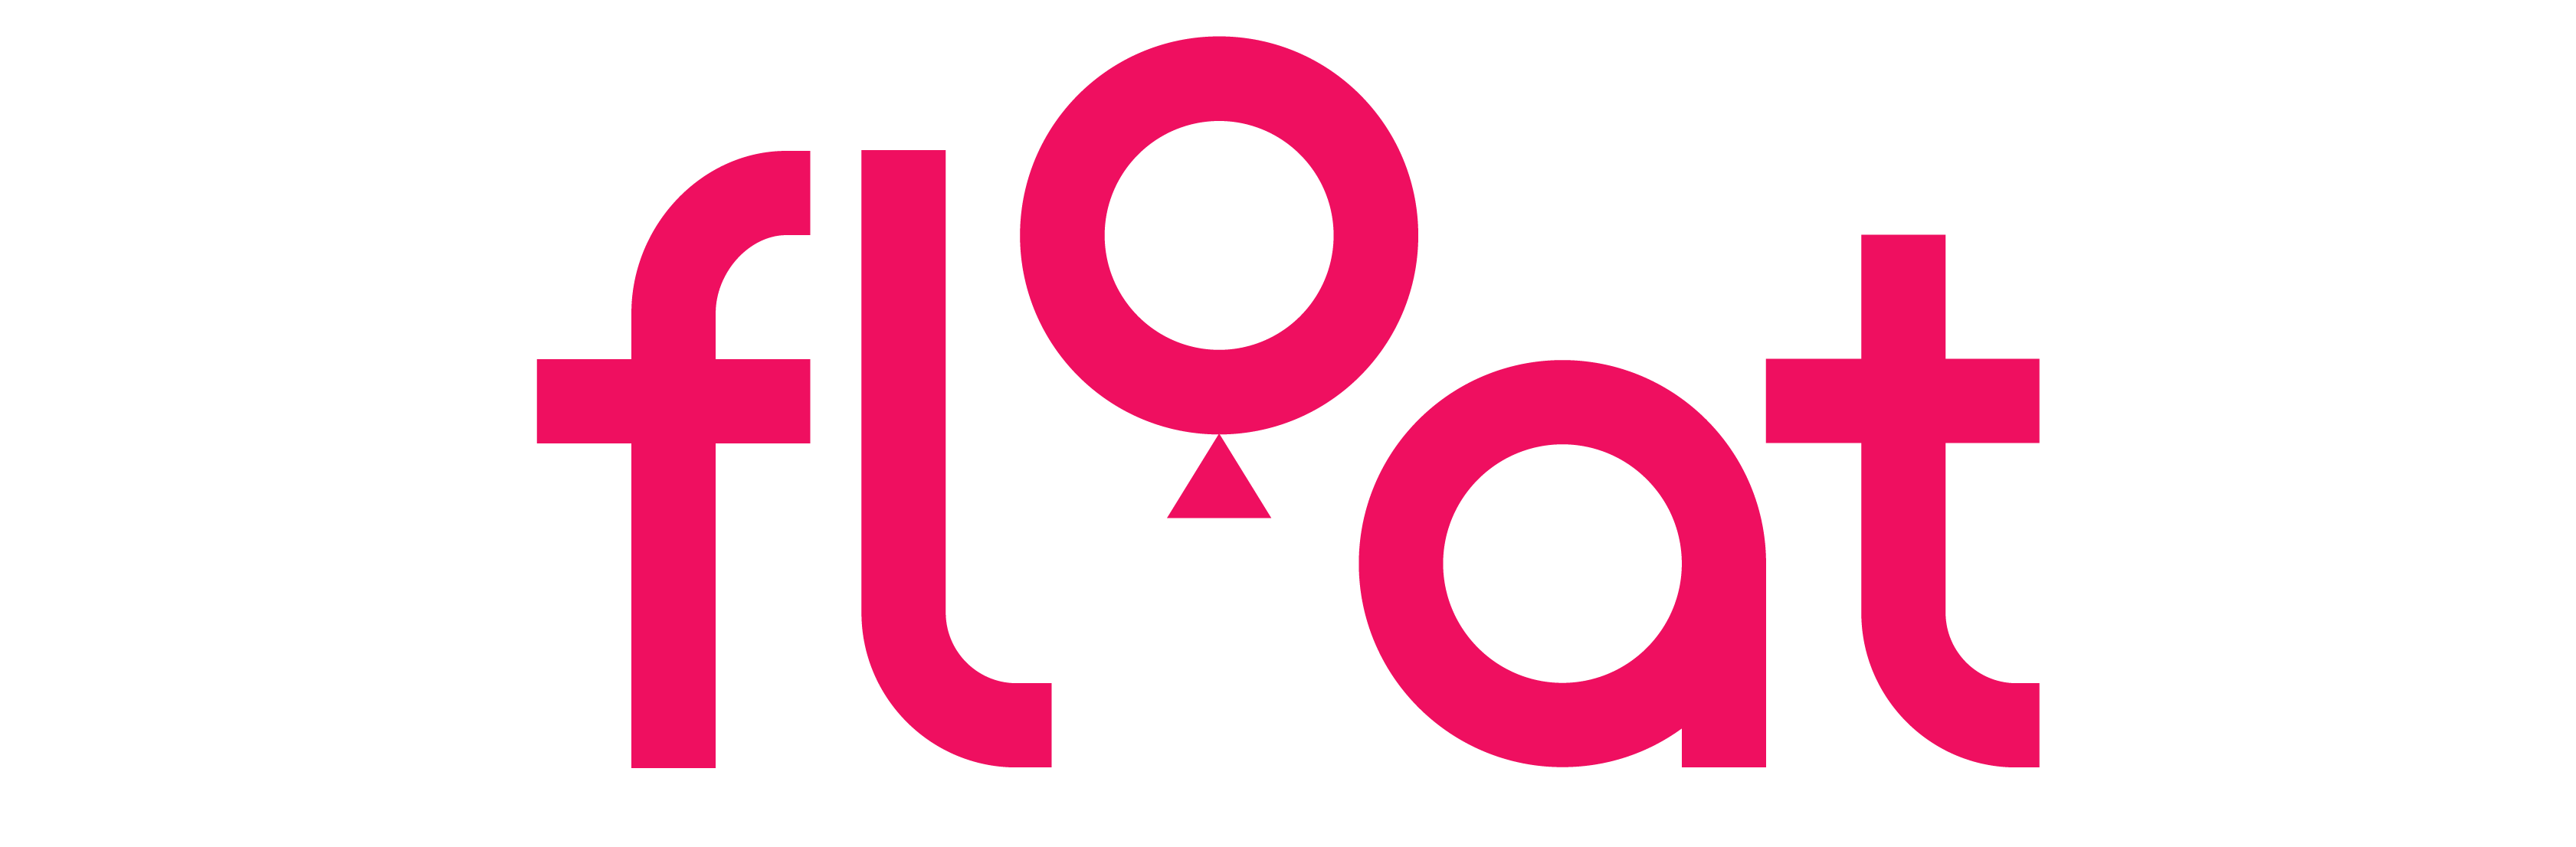 float logo